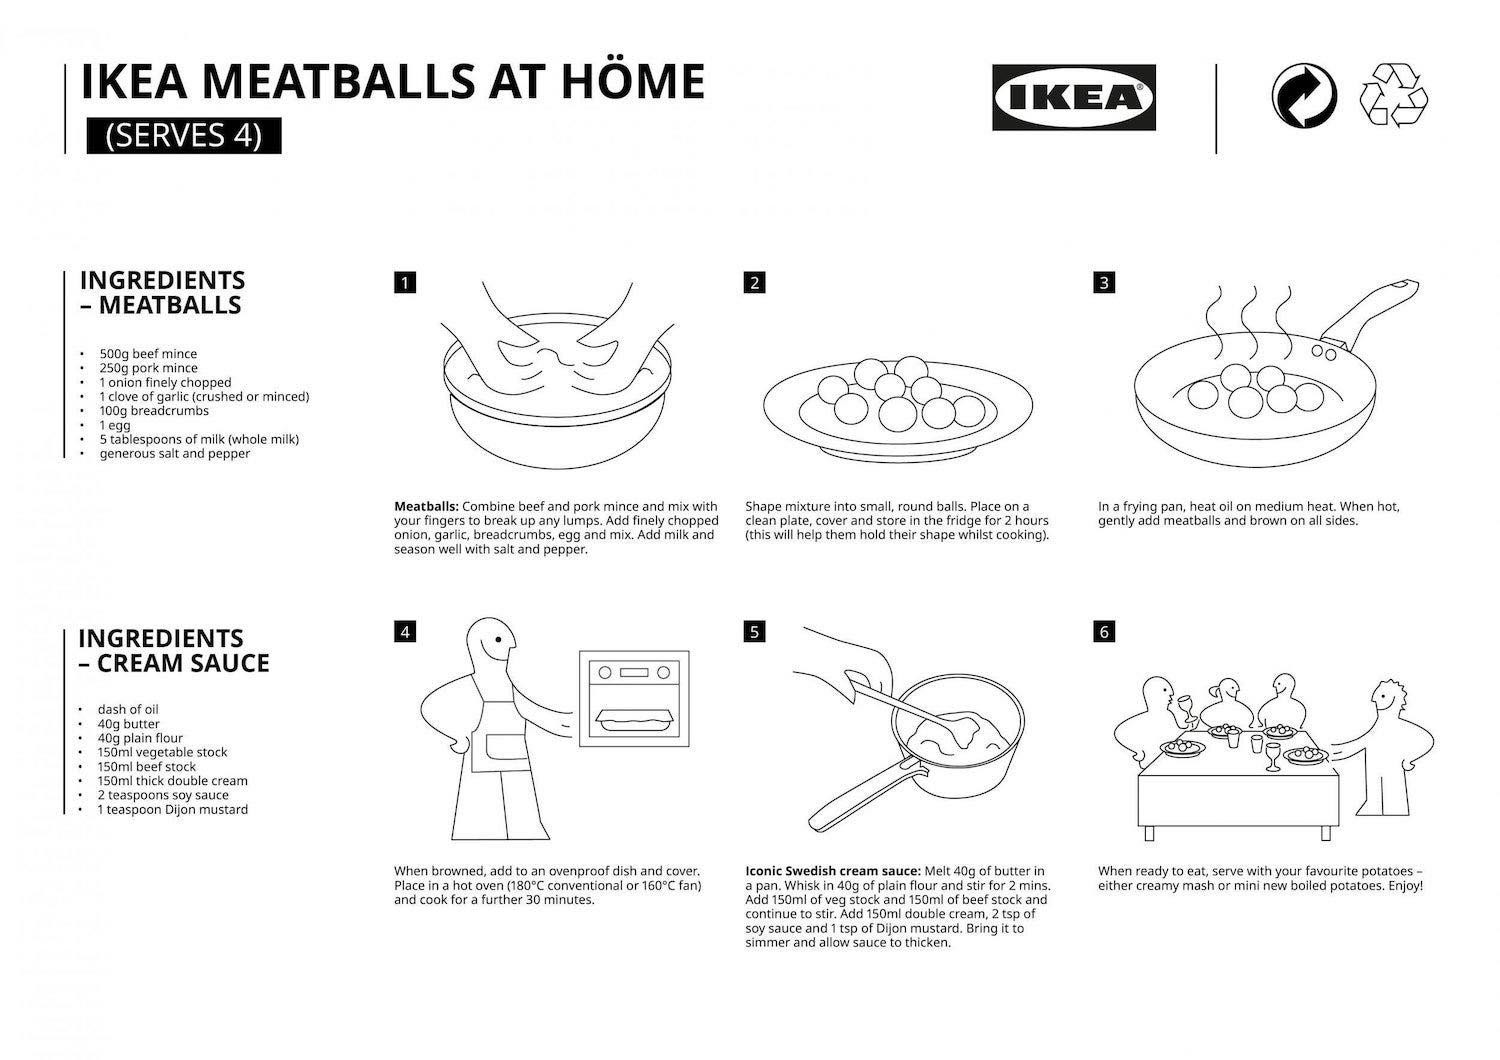 IKEA releases Swedish Meatball instructions.